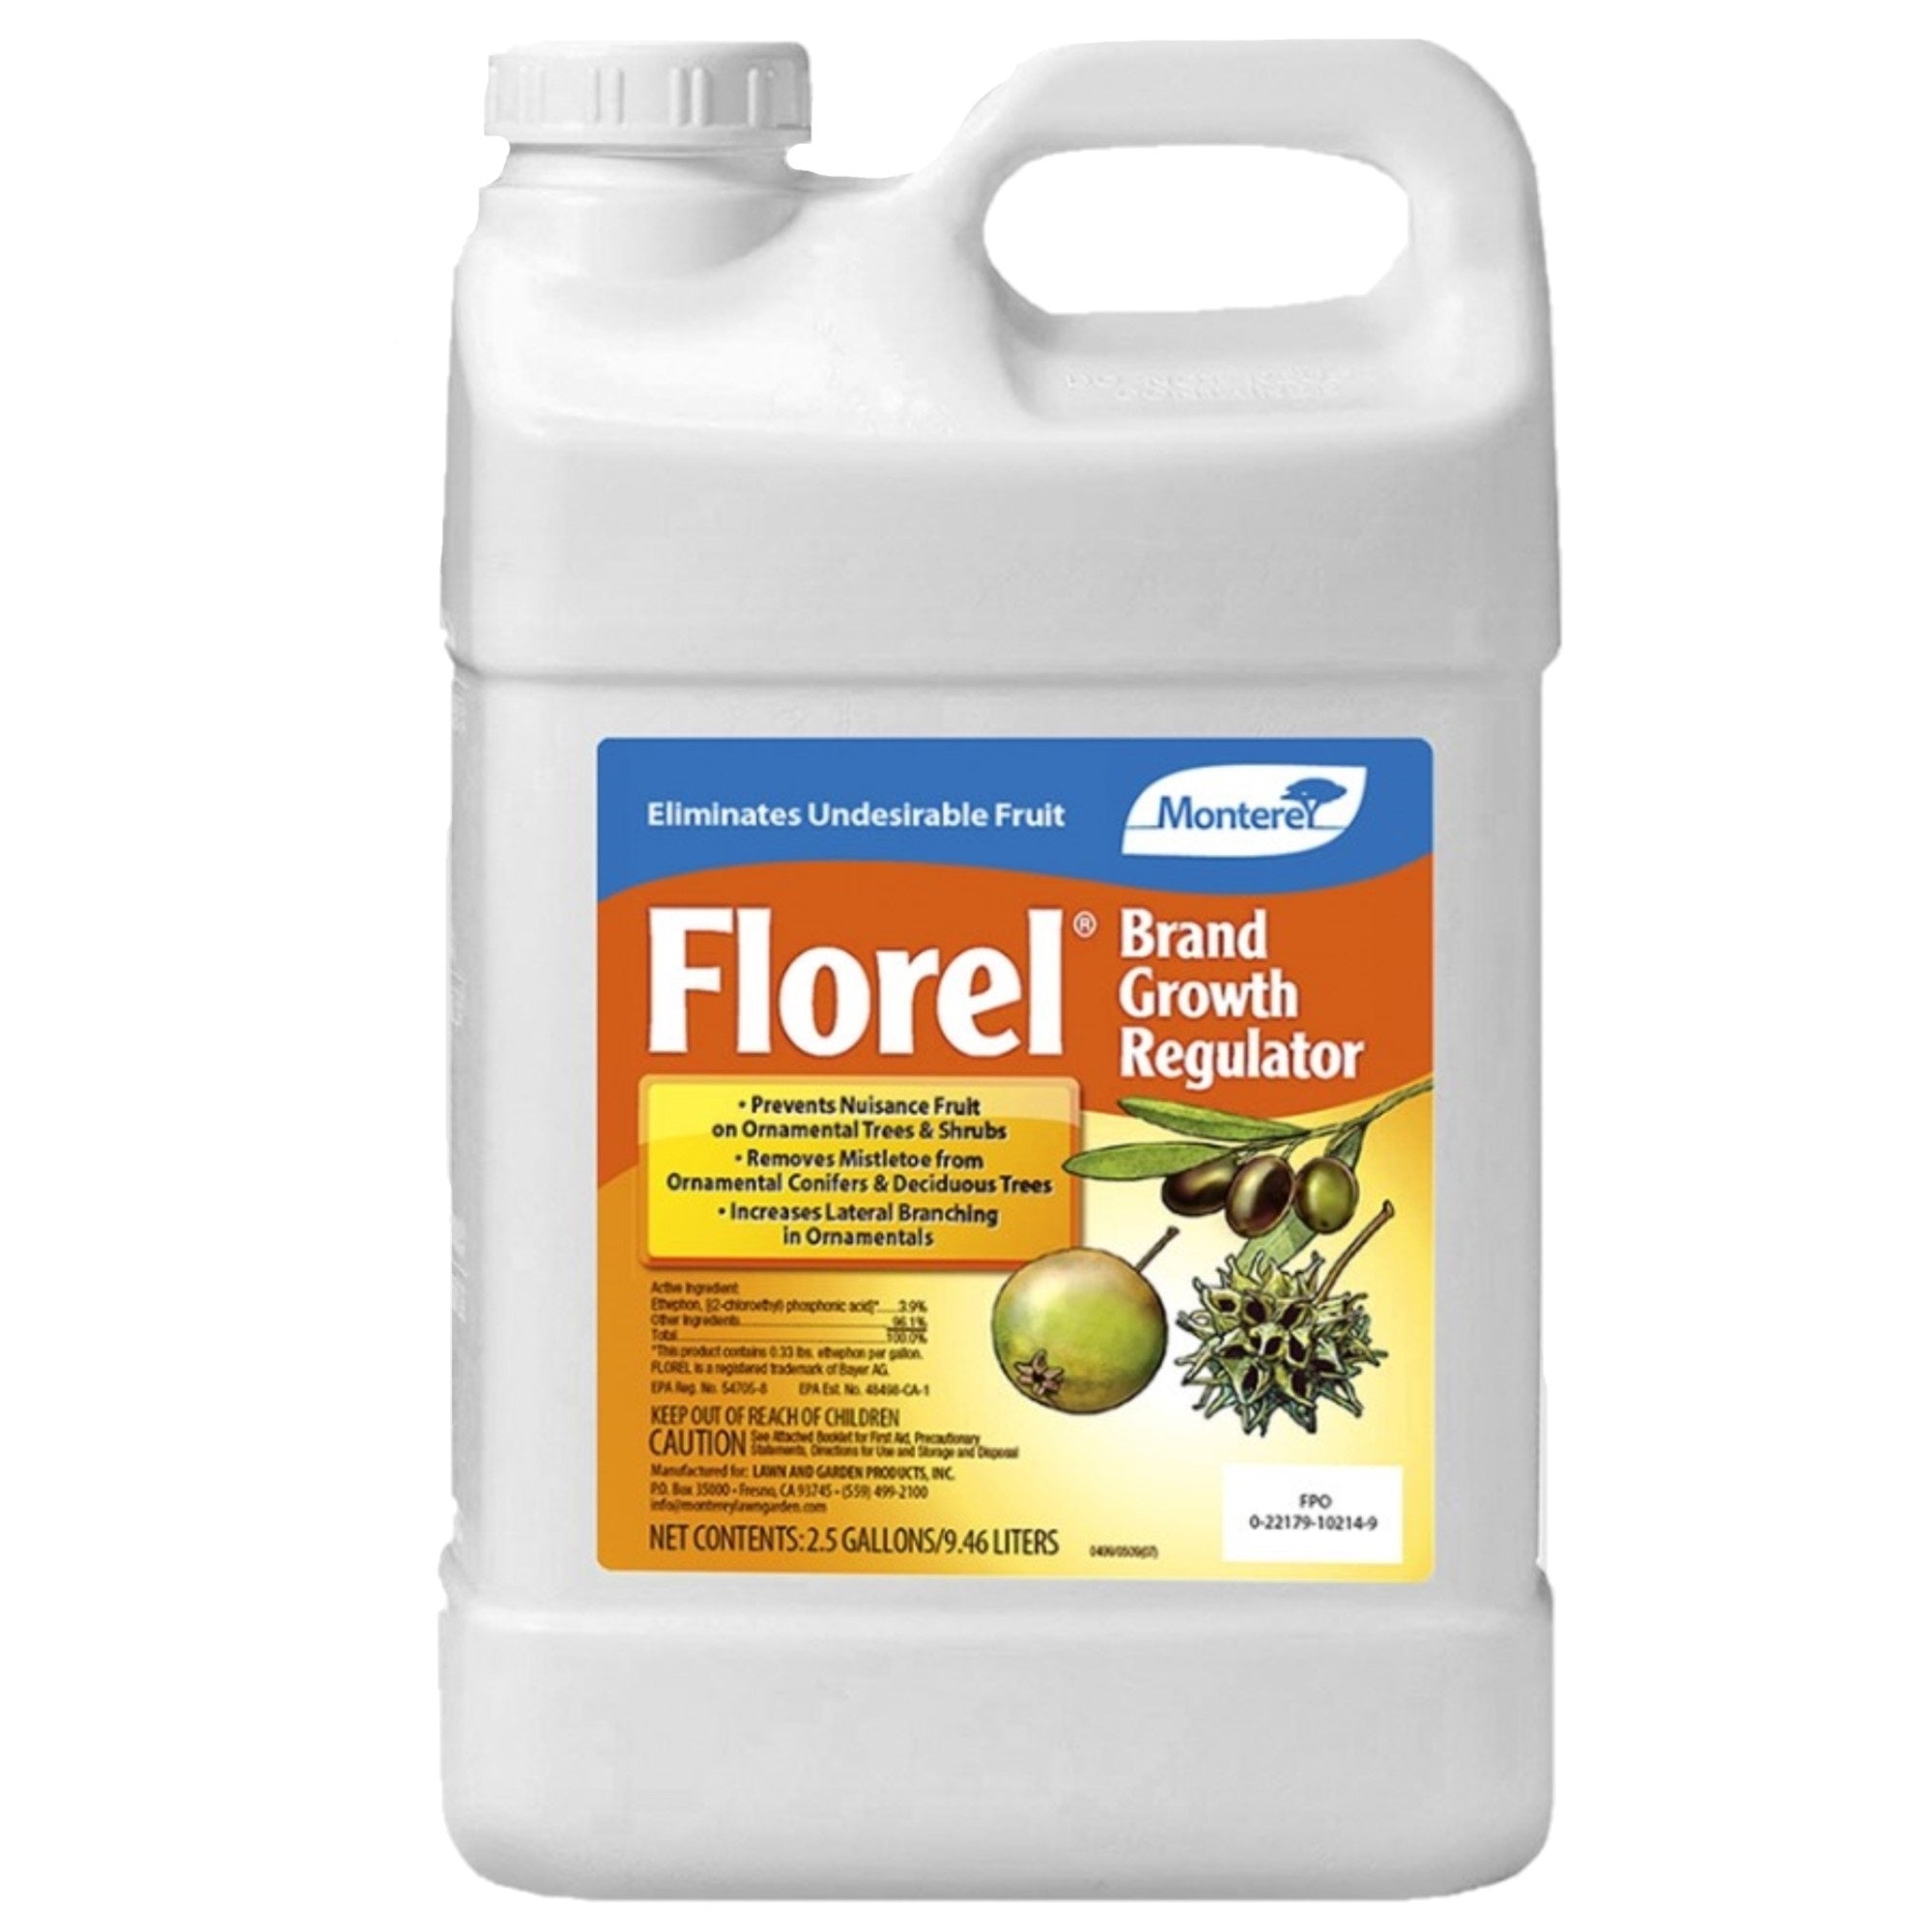 Monterey Florel Brand Plant Growth Regulator, 2.5 Gallons